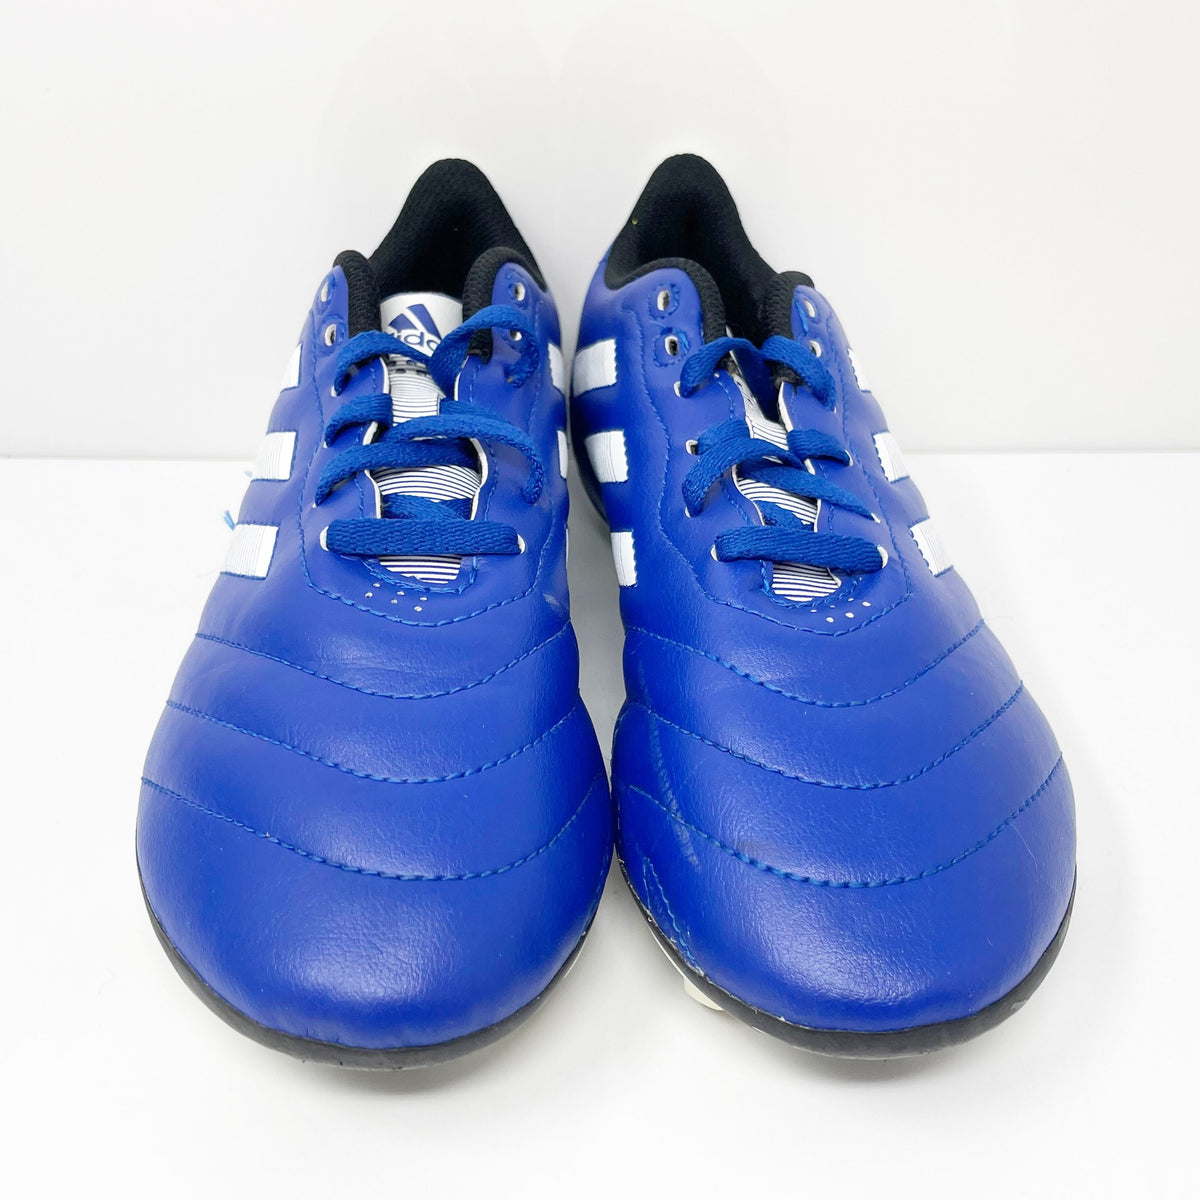 Adidas Boys Goletto VIII GW6162 Blue Soccer Cleats Shoes Size 4 ...